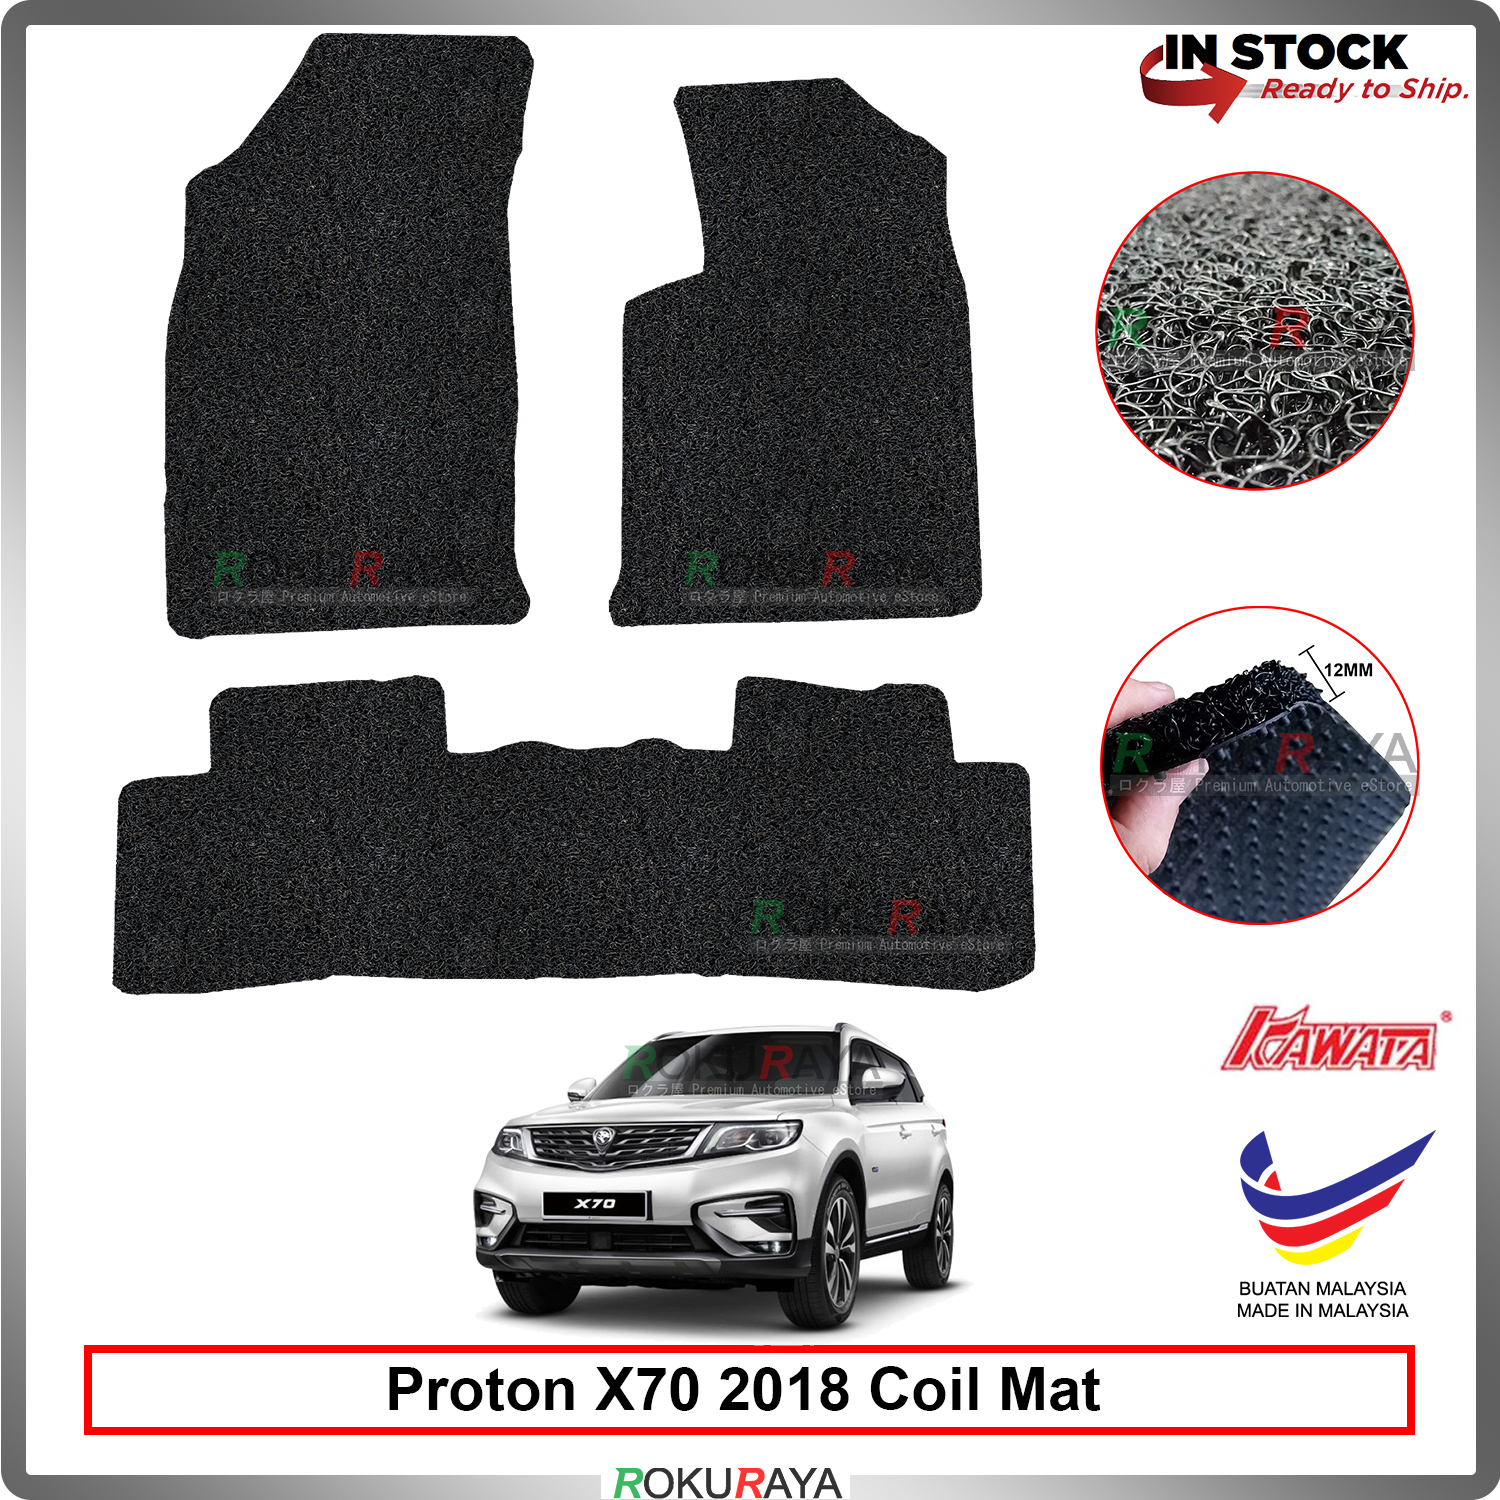 Proton X70 SUV 2018 12mm Coil Floor